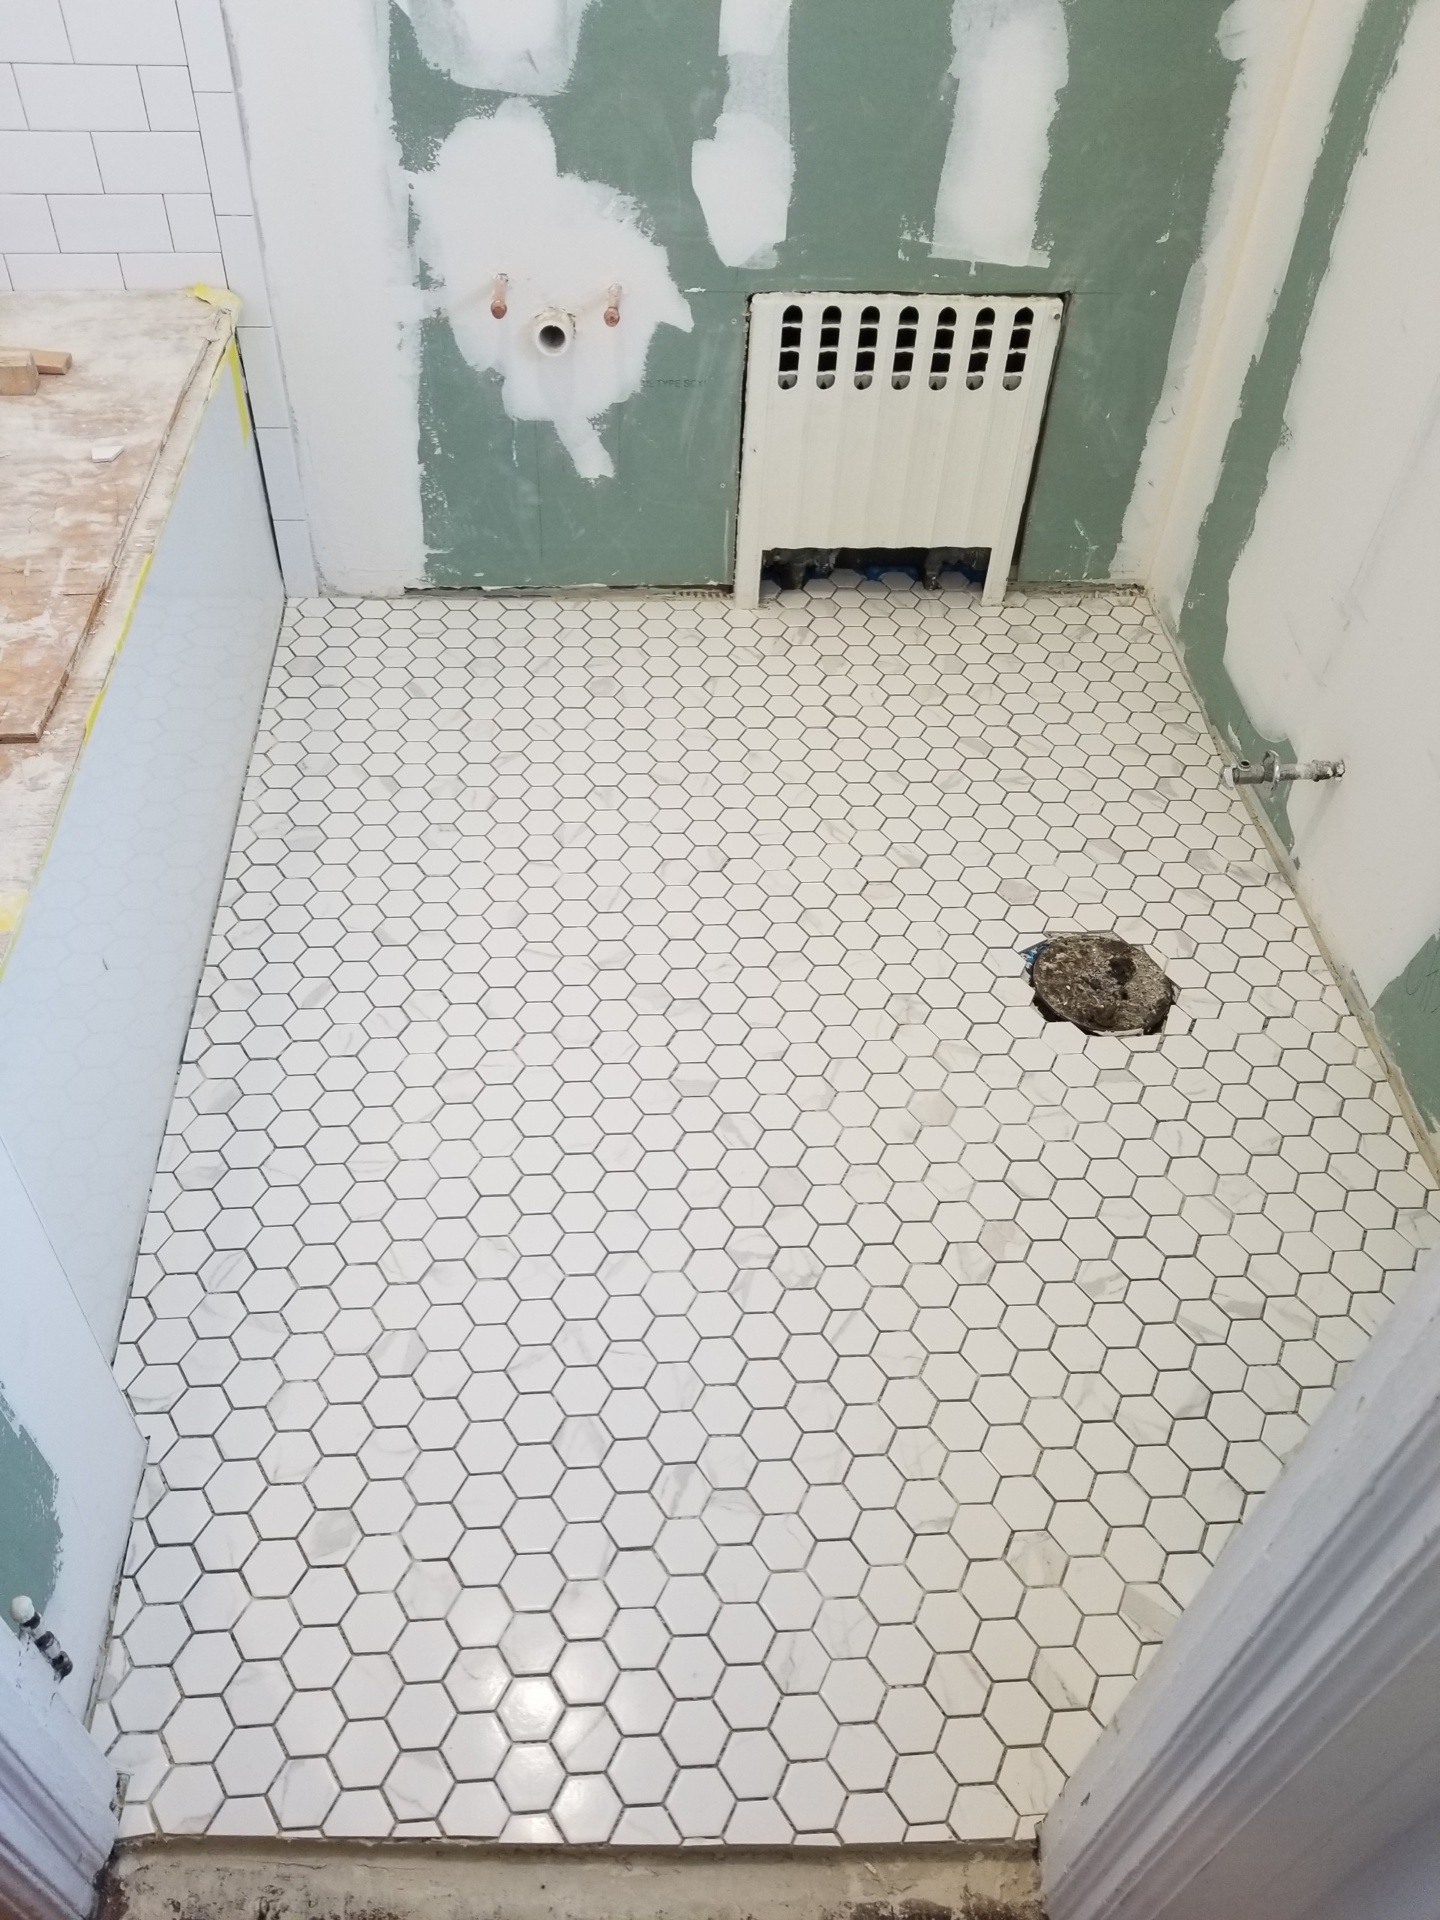 Simply by Simone - Simone Piliero - My Black and White Bathroom Renovation - Hexigon Marble Tiles Installed #bathroom #home #renovation #bathroomrenovation #diyhome #bathroomtiles #bathroomdecor #bathroomideas #bathroomrenovationideas